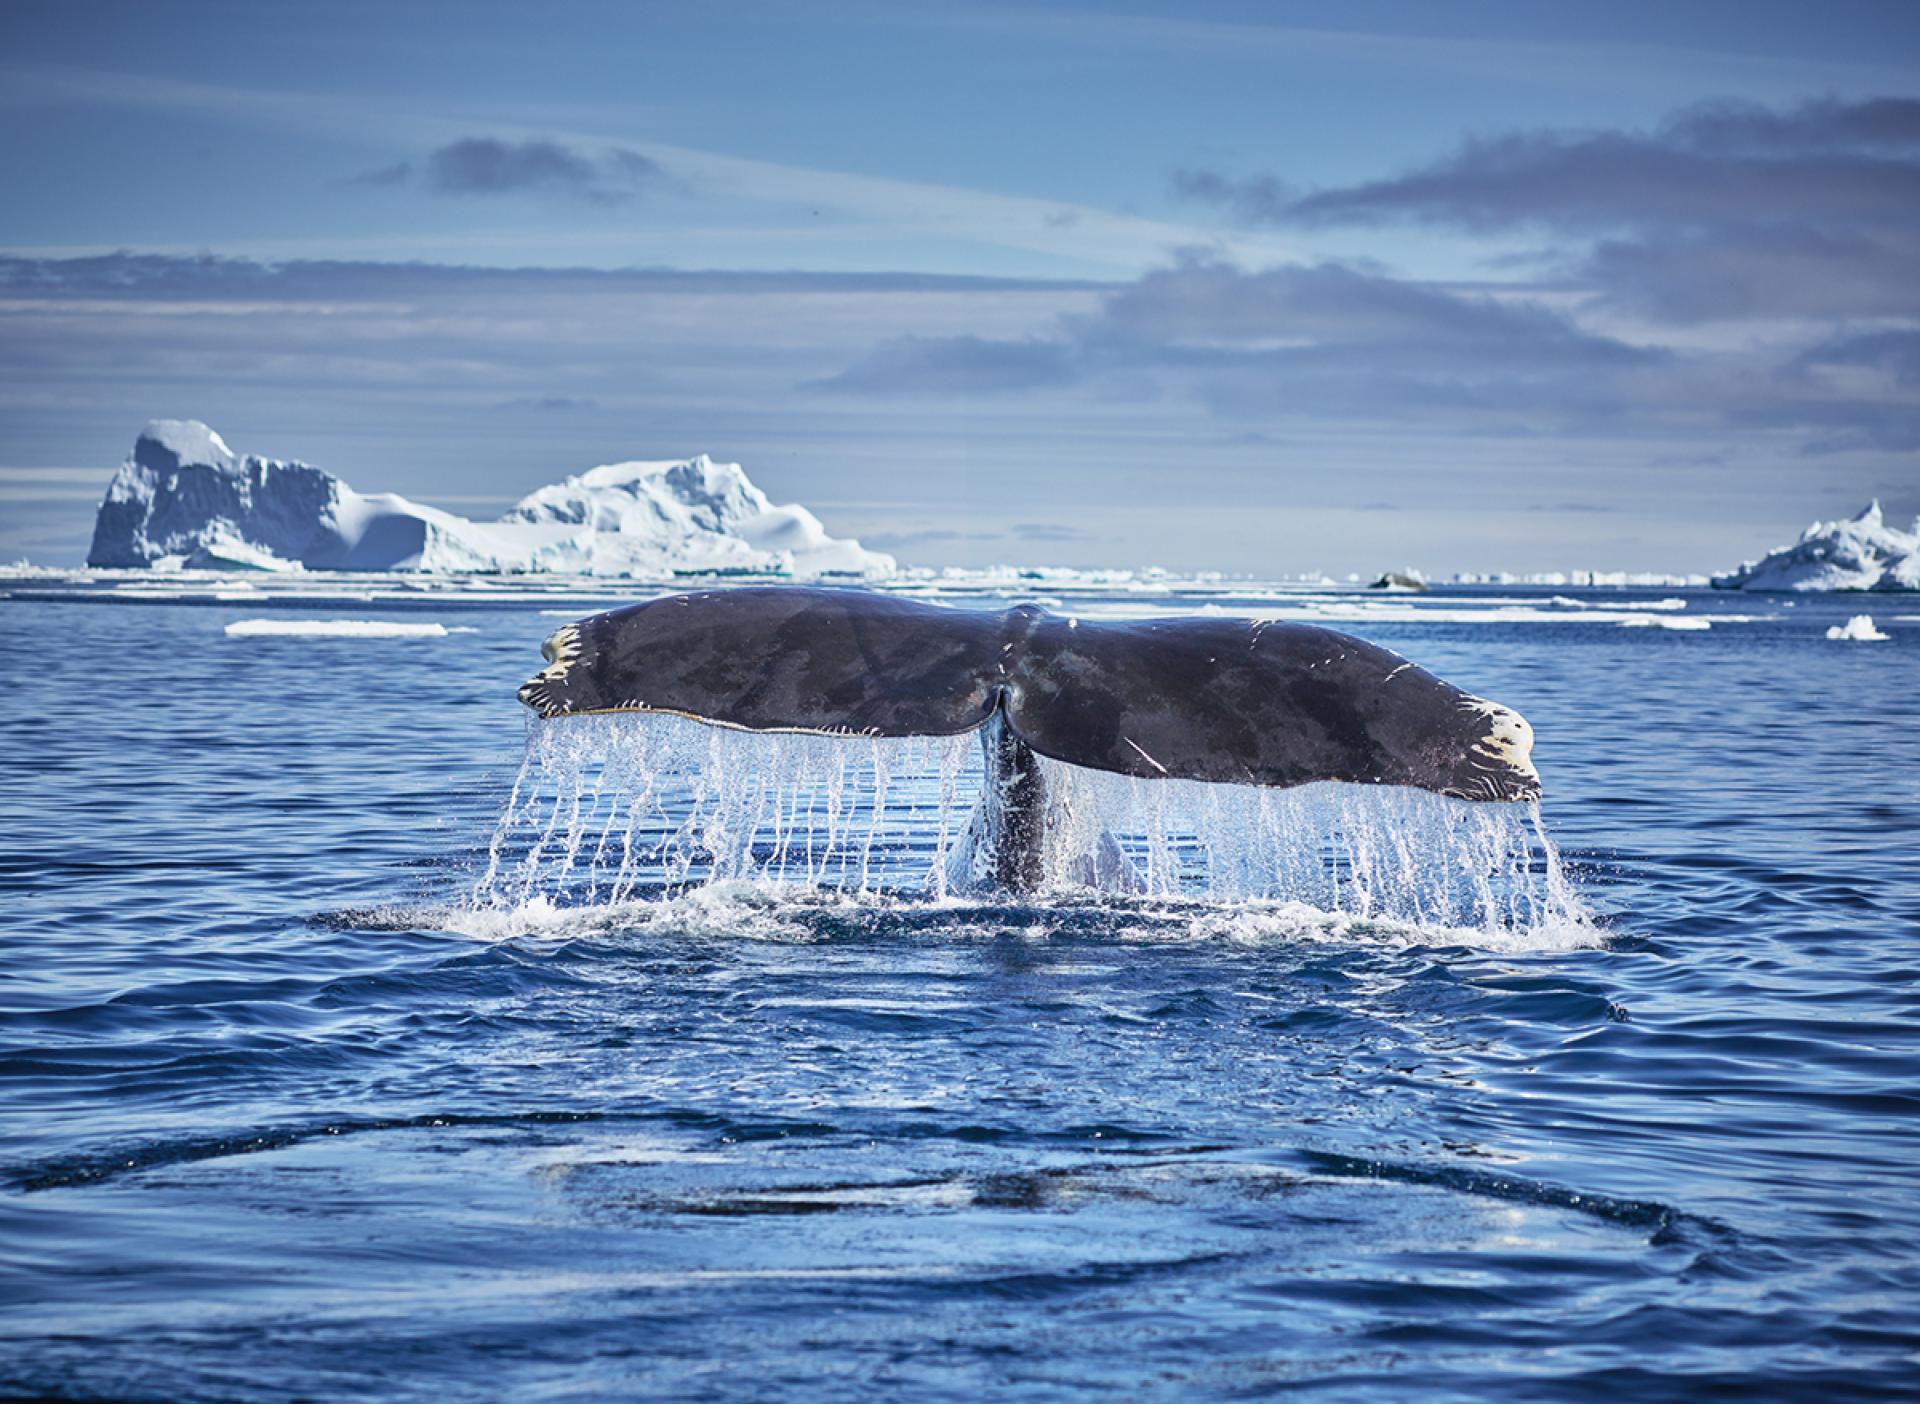 London Photography Awards Winner - Beautiful Buckle Whale